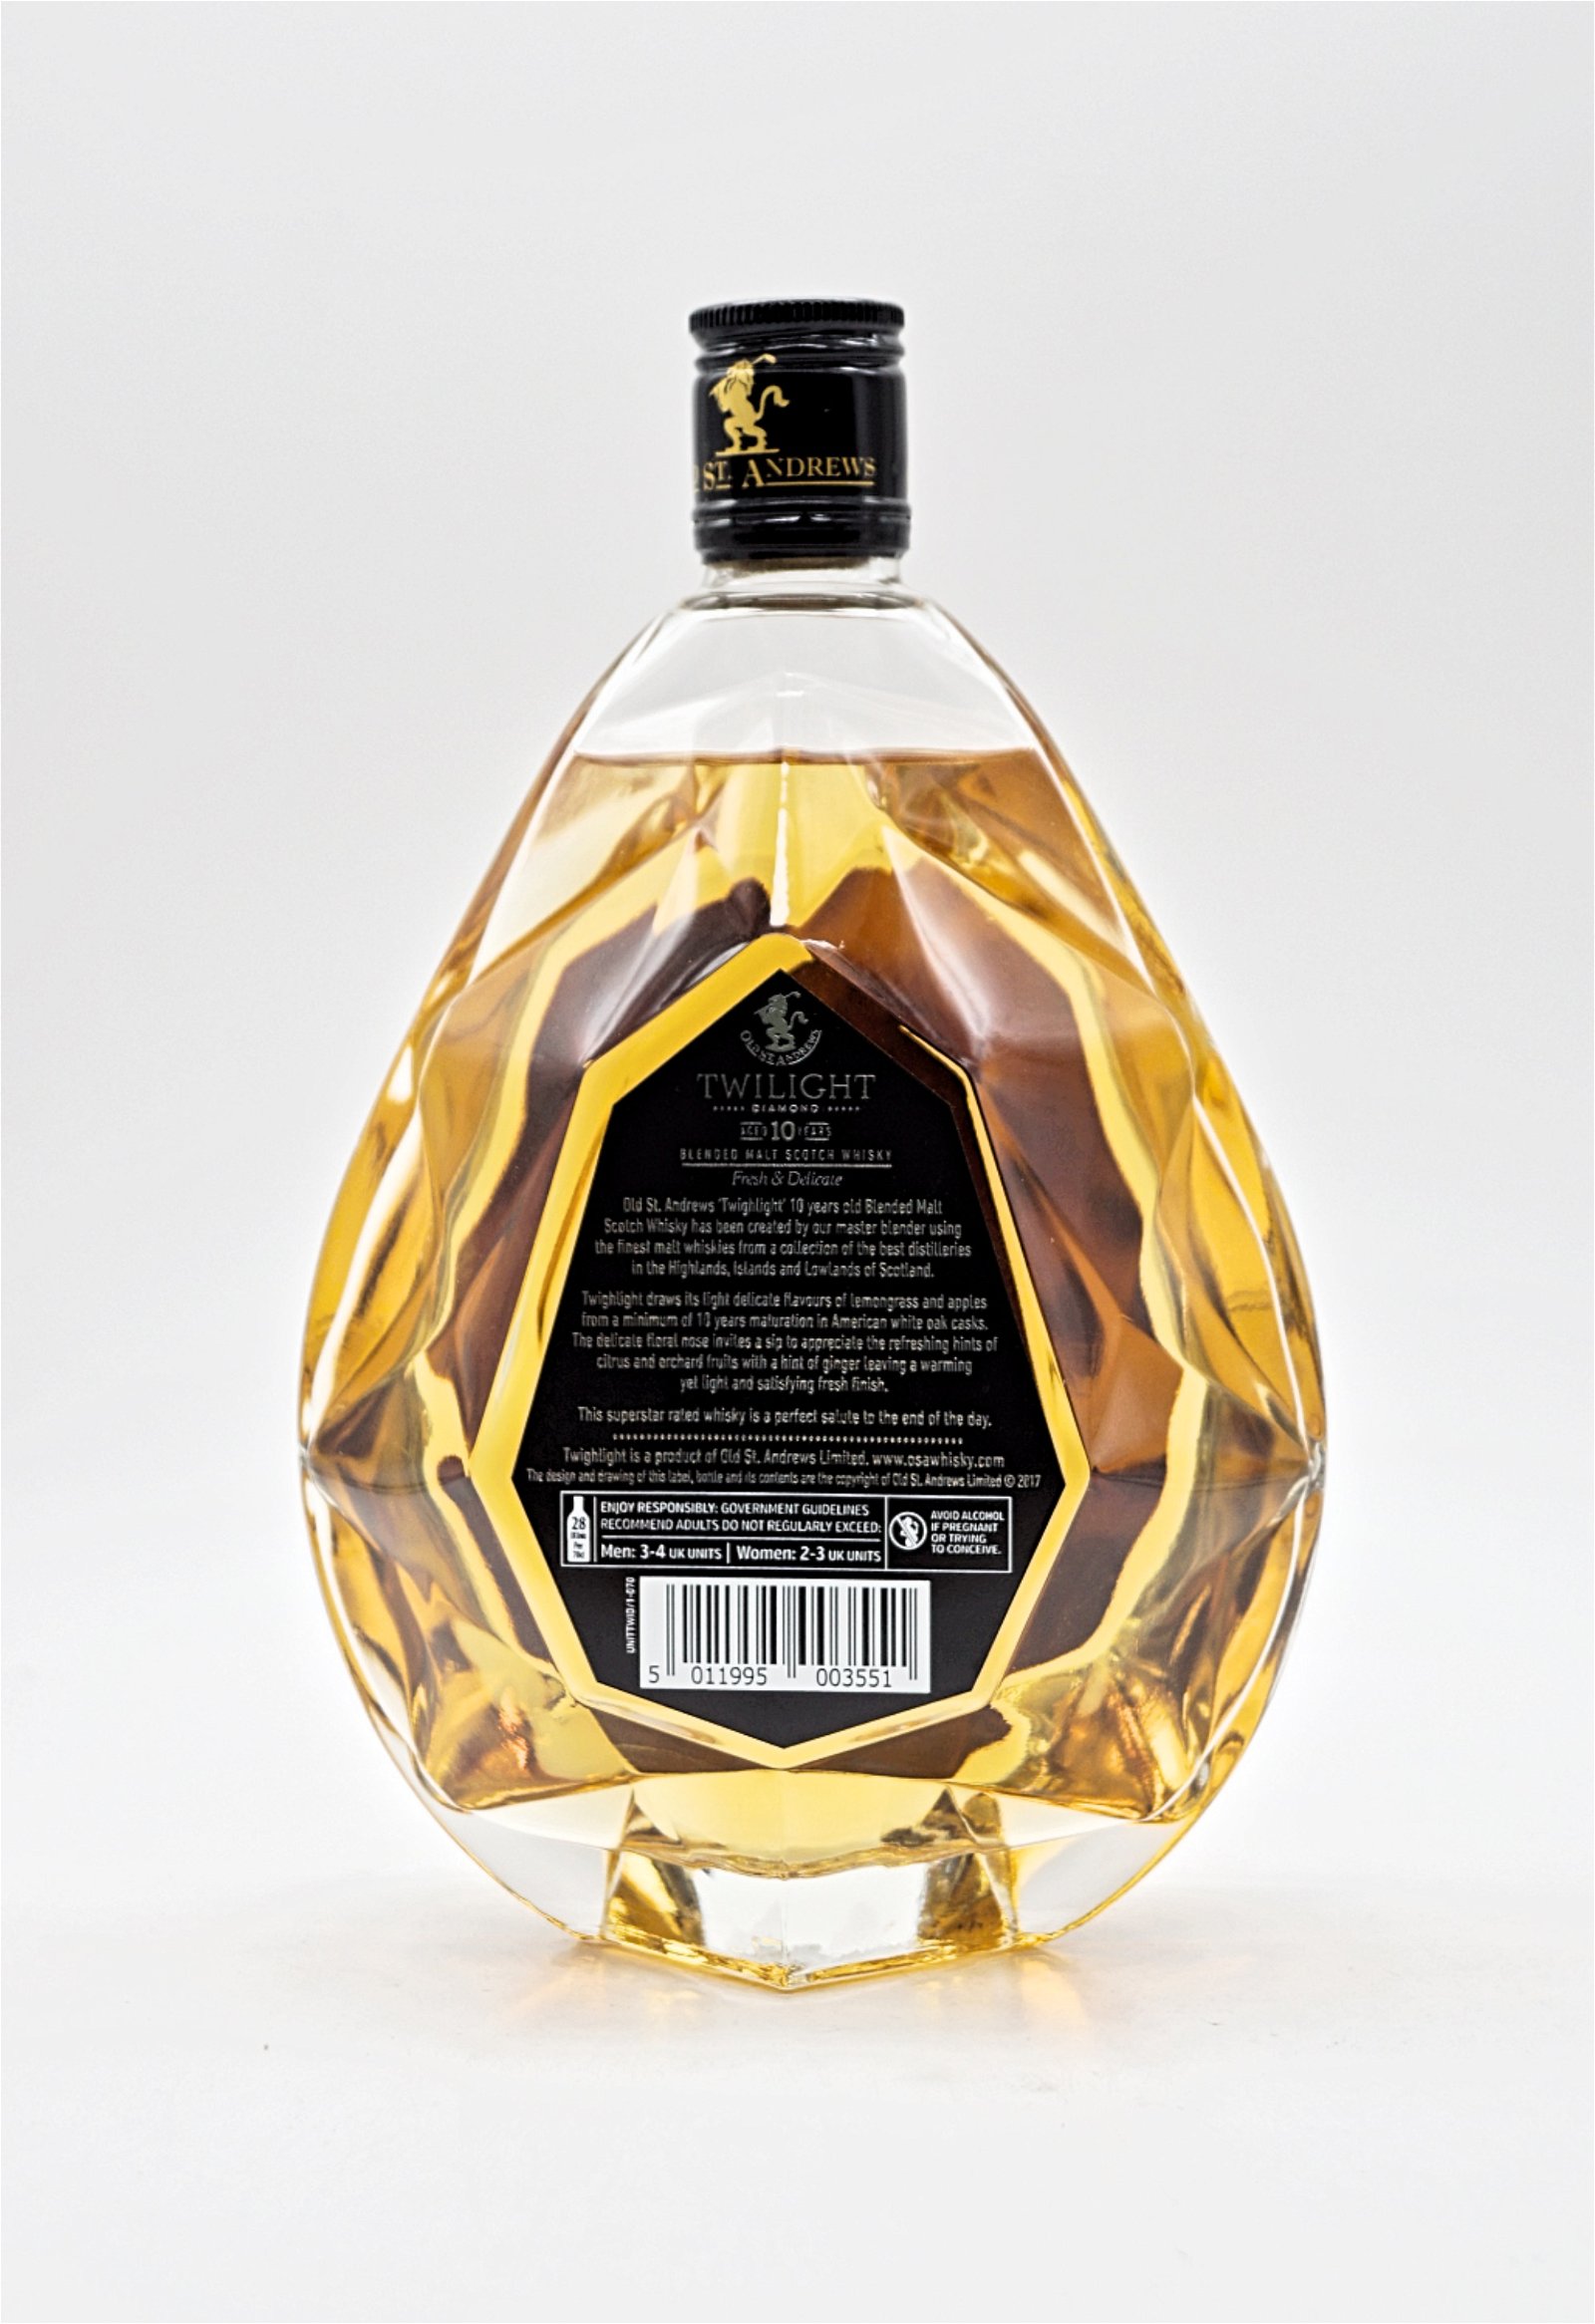 Old St. Andrews 10 Jahre Twilight Diamond Blended Malt Scotch Whisky